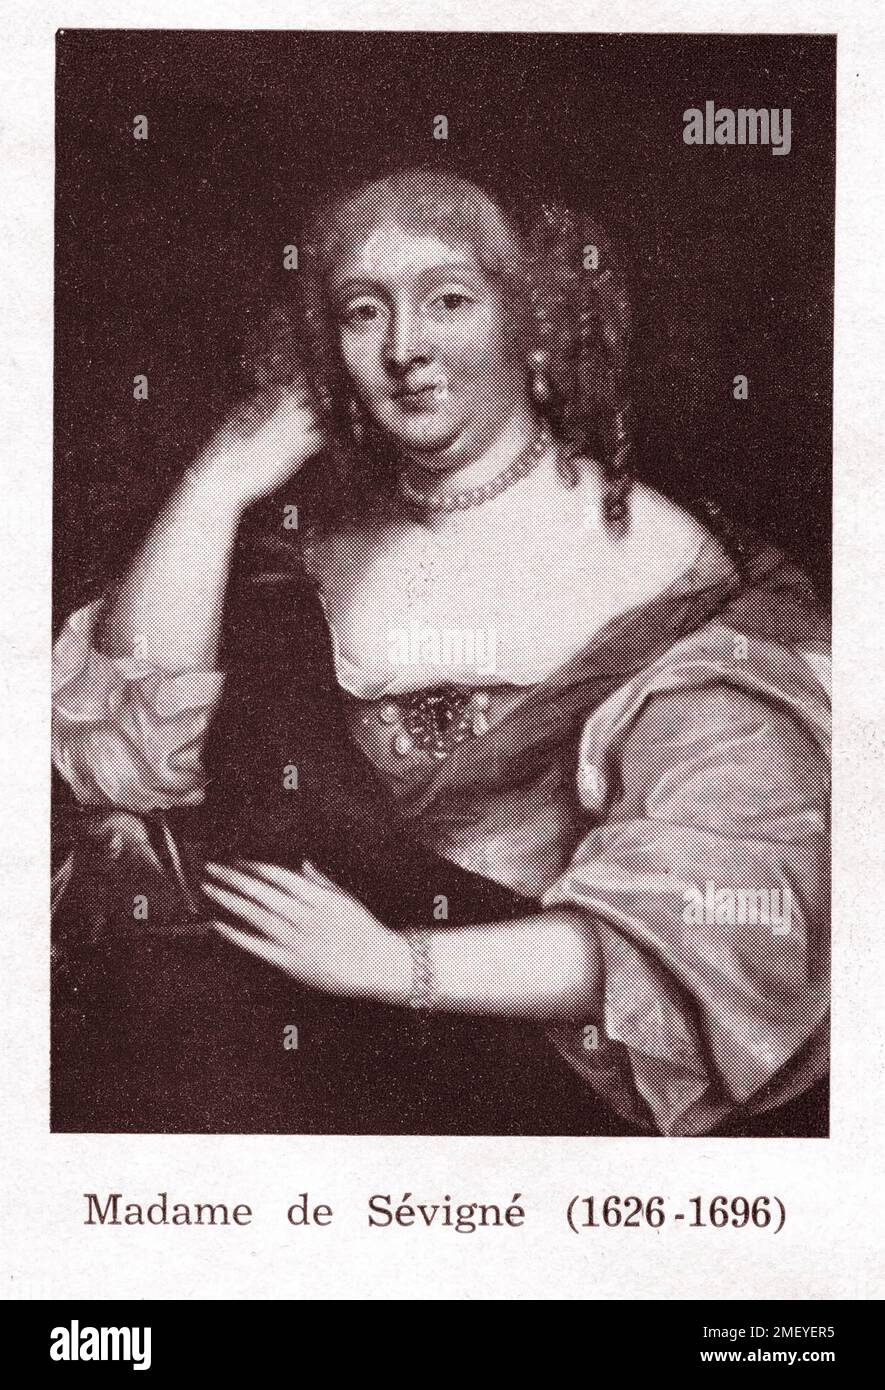 Old portrait of French writer Madame de Sévigné Stock Photo